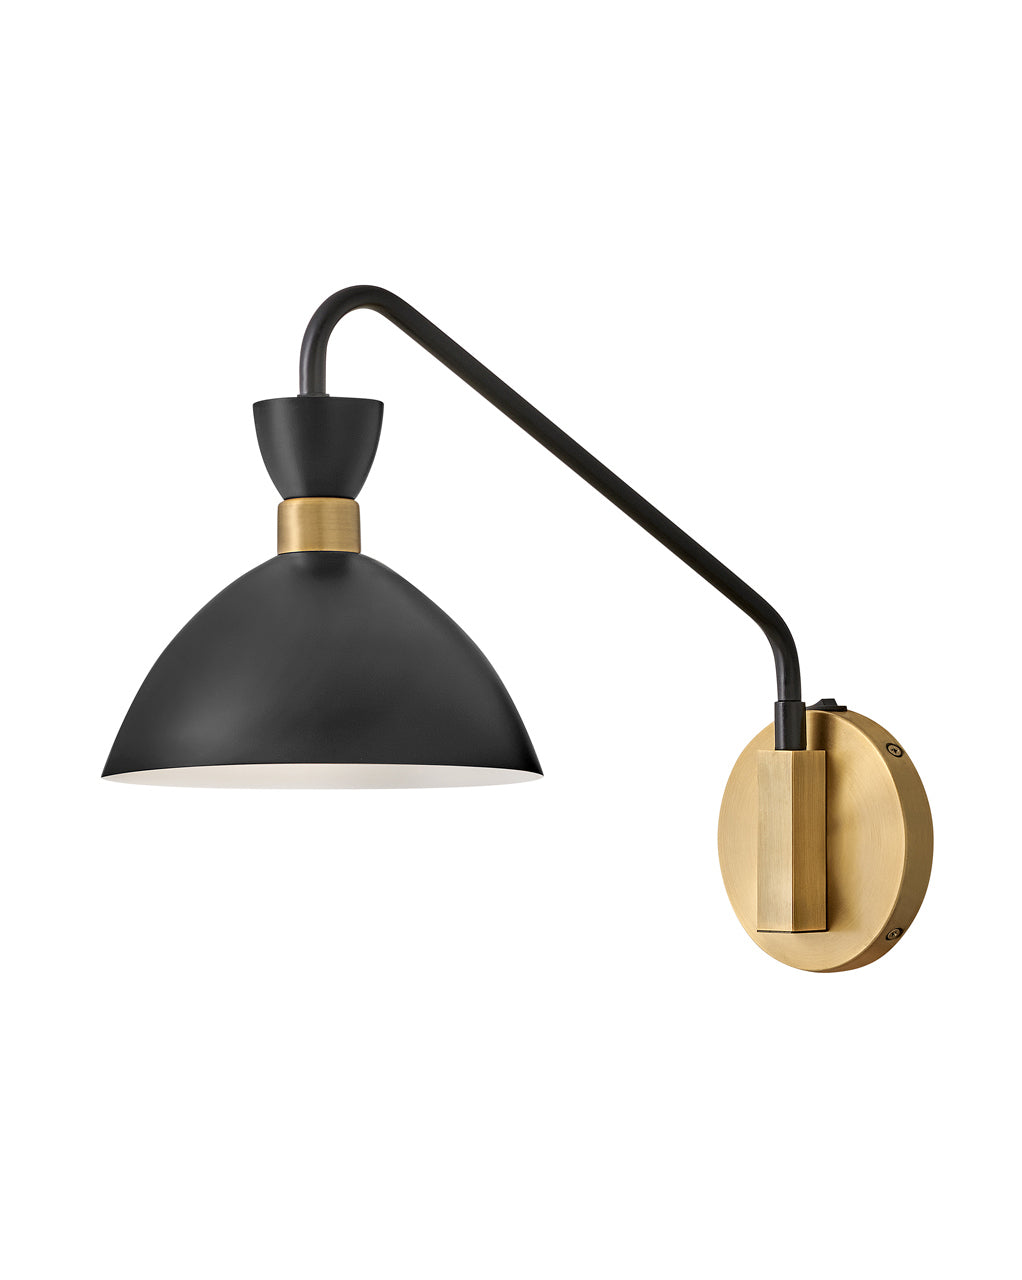 Lark SIMON Single Light Plug-In Sconce L83250 Wall Light Fixtures Lark Black with Heritage Brass accents  